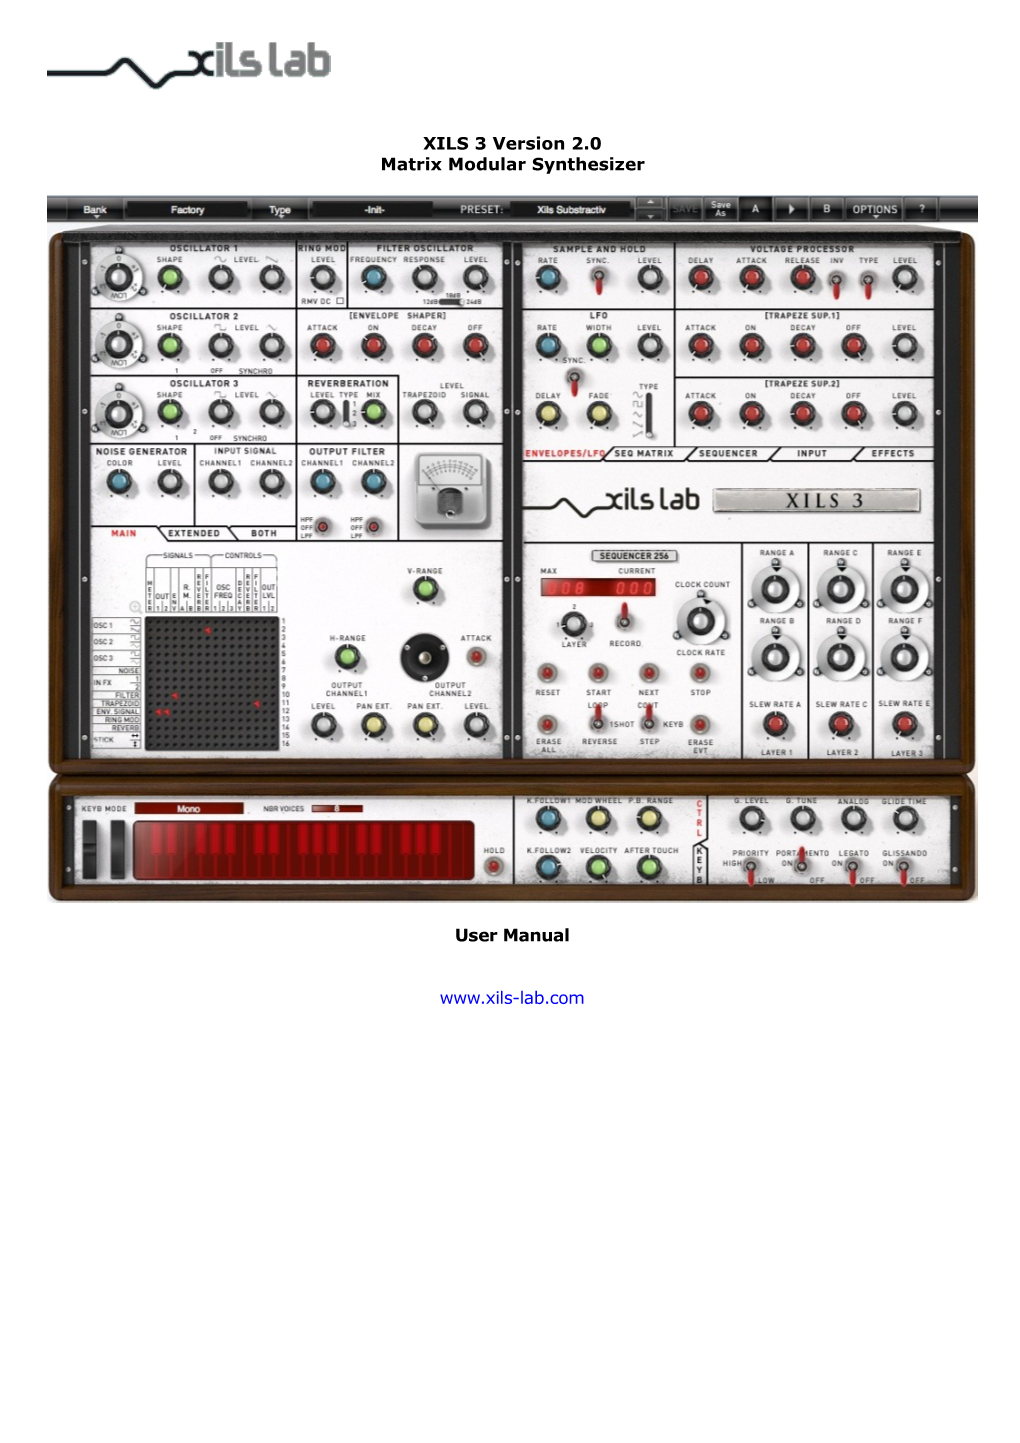 XILS 3 Version 2.0 Matrix Modular Synthesizer User Manual